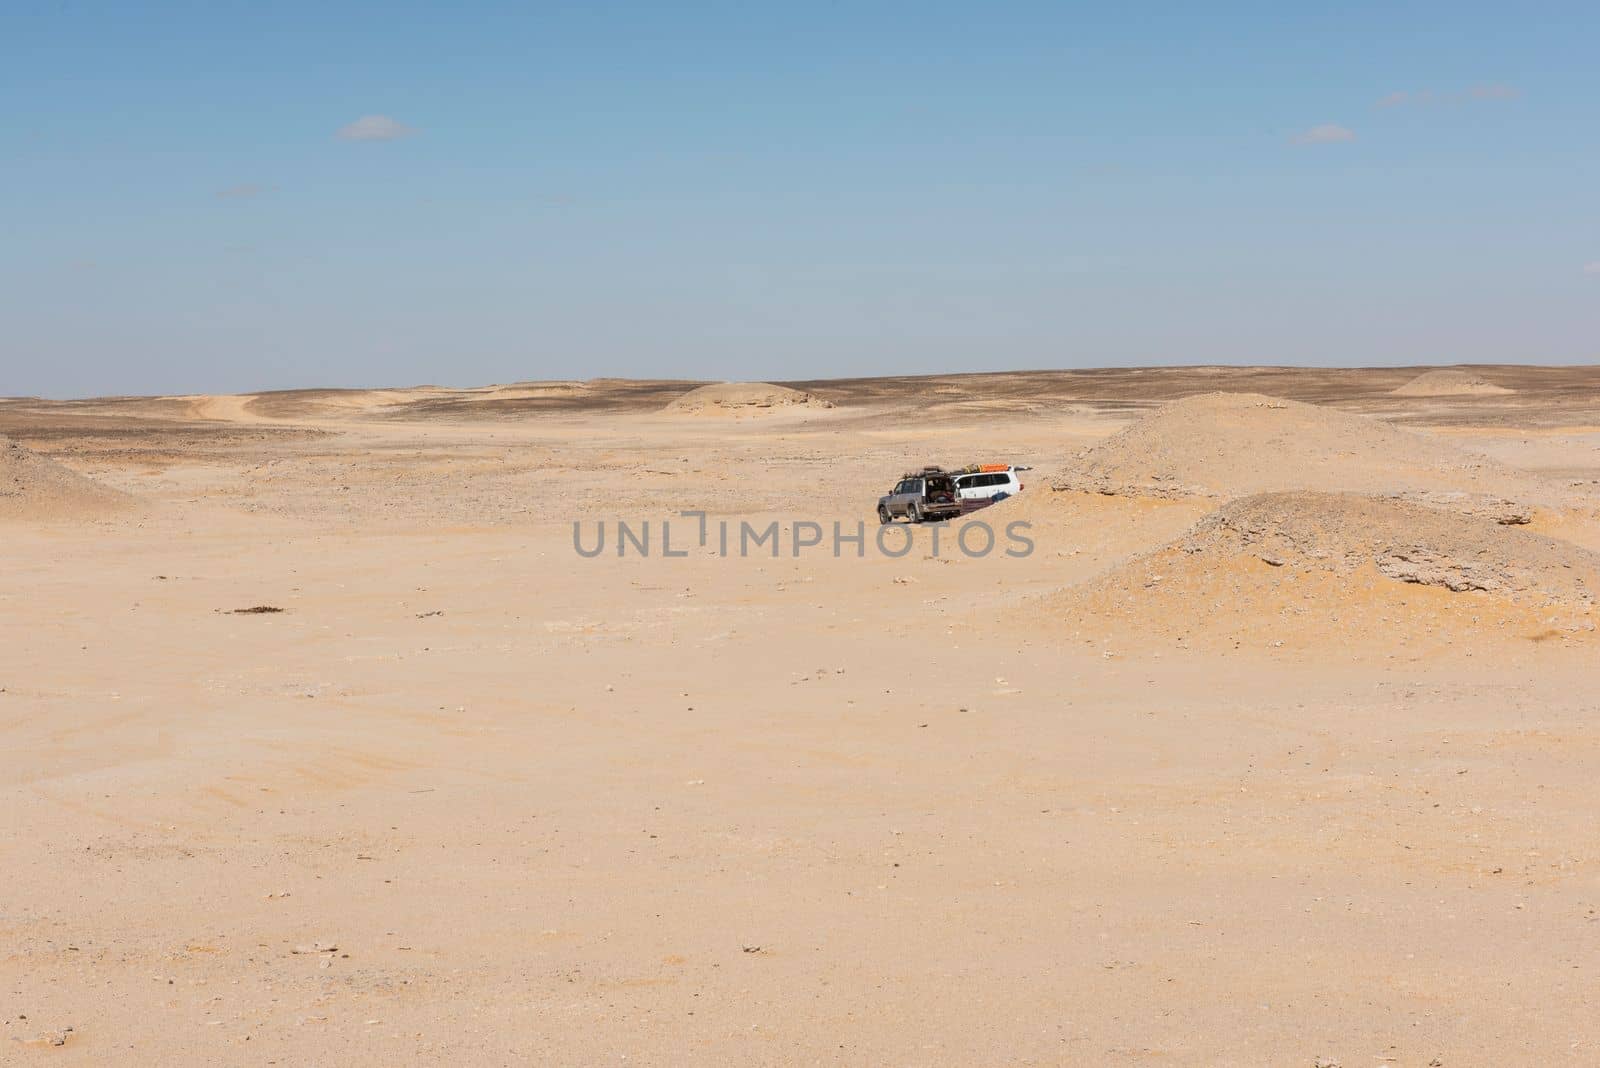 Barren desert landscape in hot climate with off-road vehicle by paulvinten